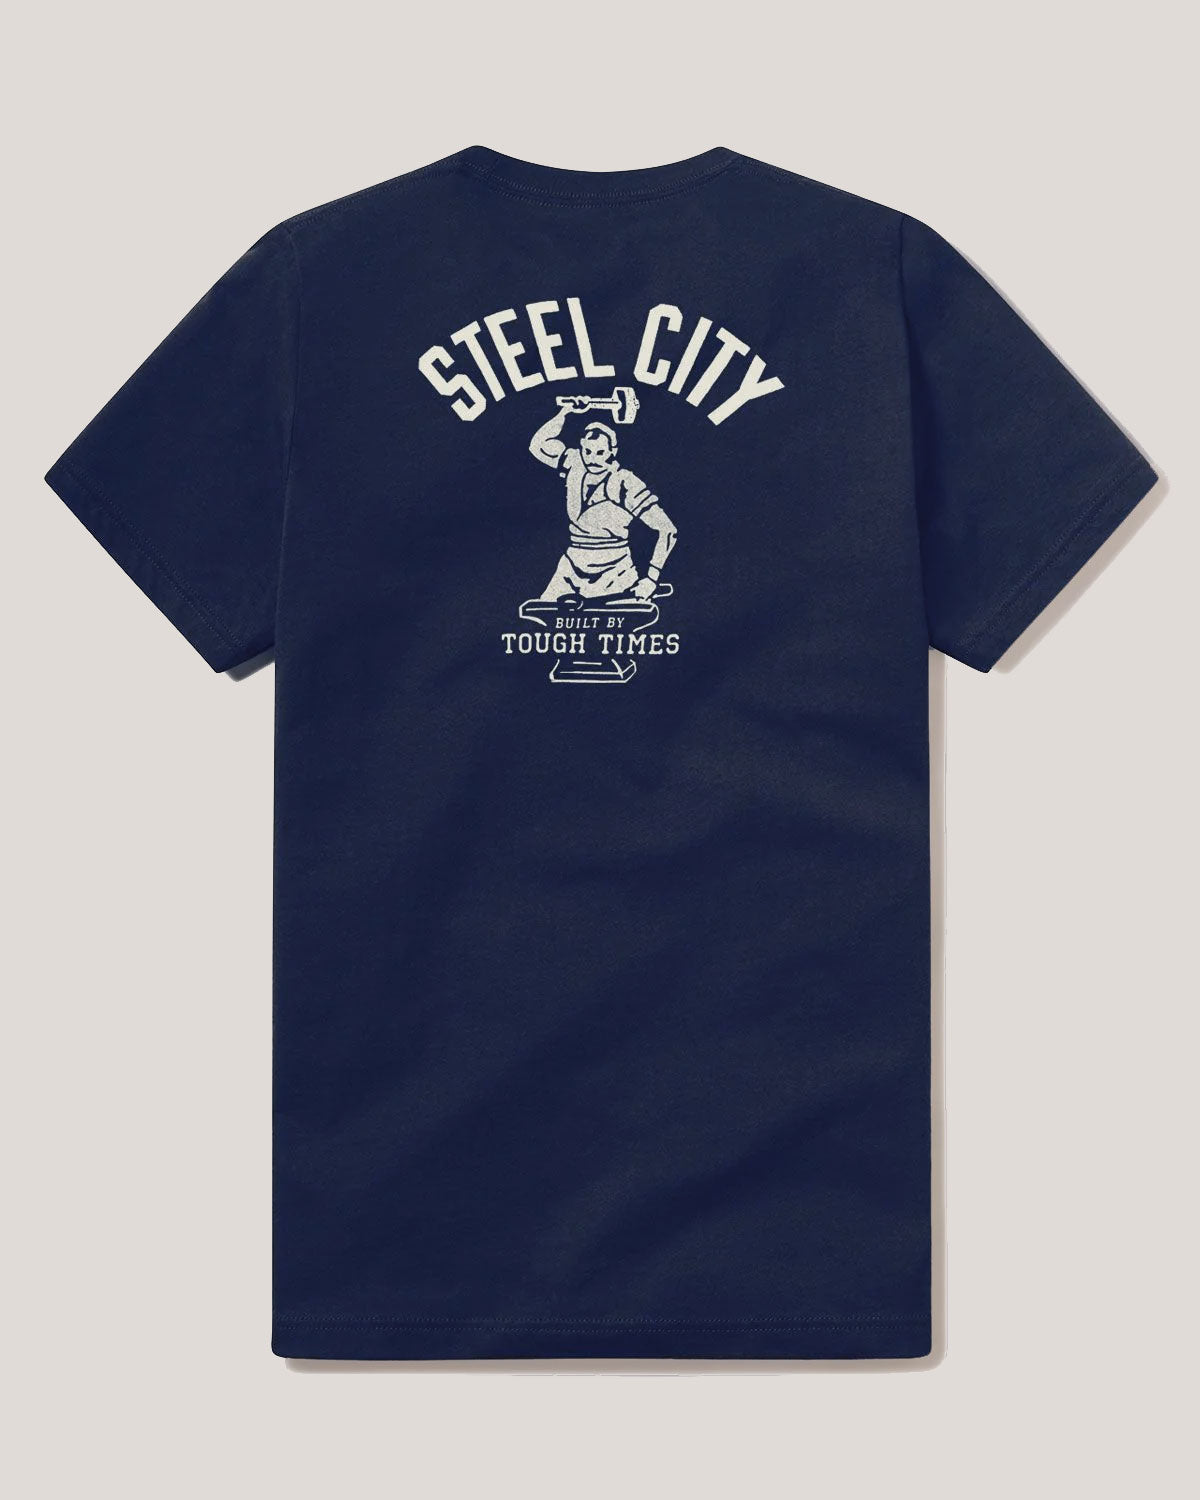 emulering Vedholdende Arab Tough Times Tee | Steel City Brand | Pittsburgh Grit T-Shirt